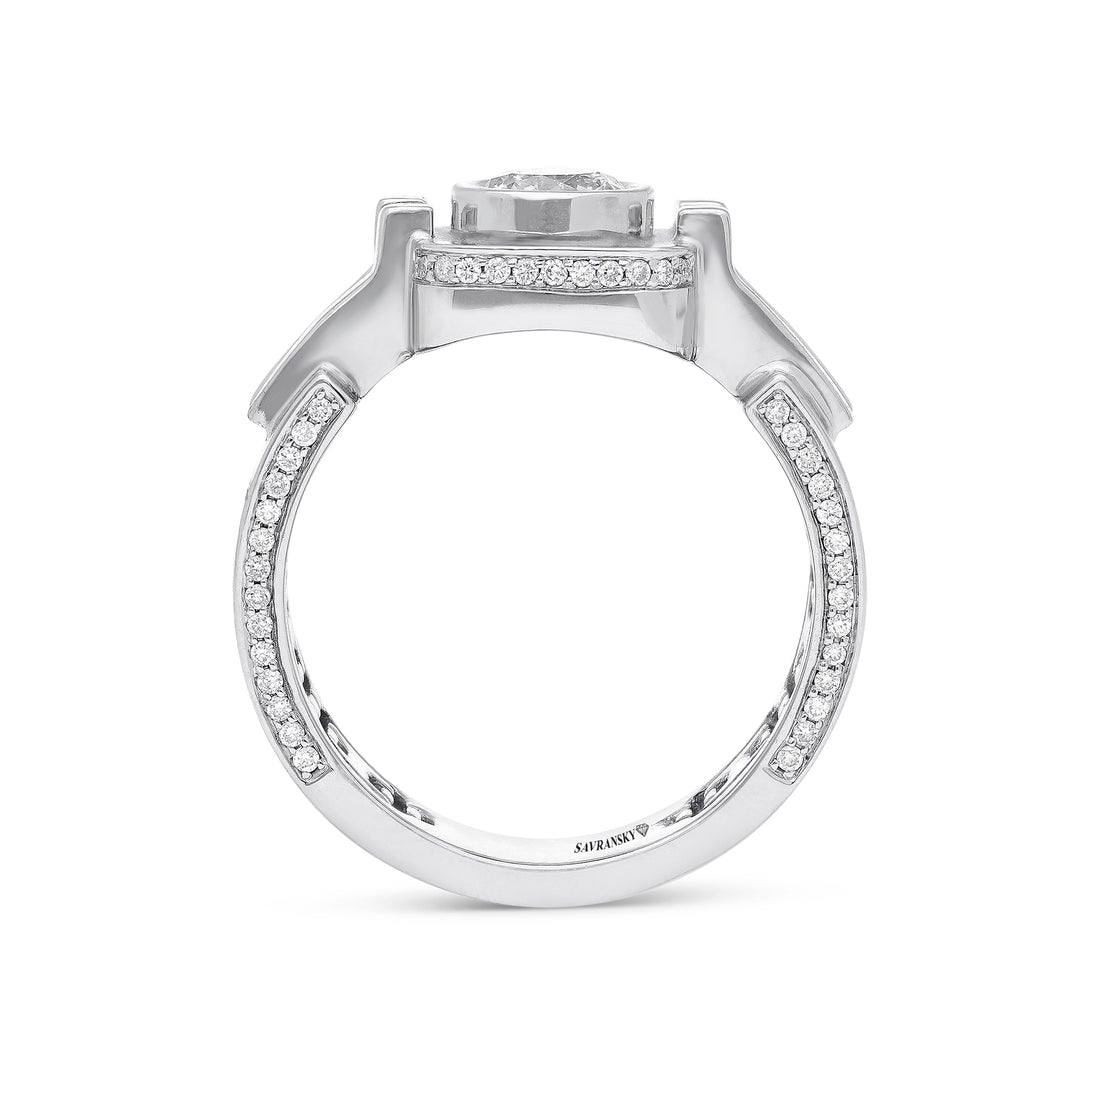 Round White Diamond Men's Ring - 1.4 Carat